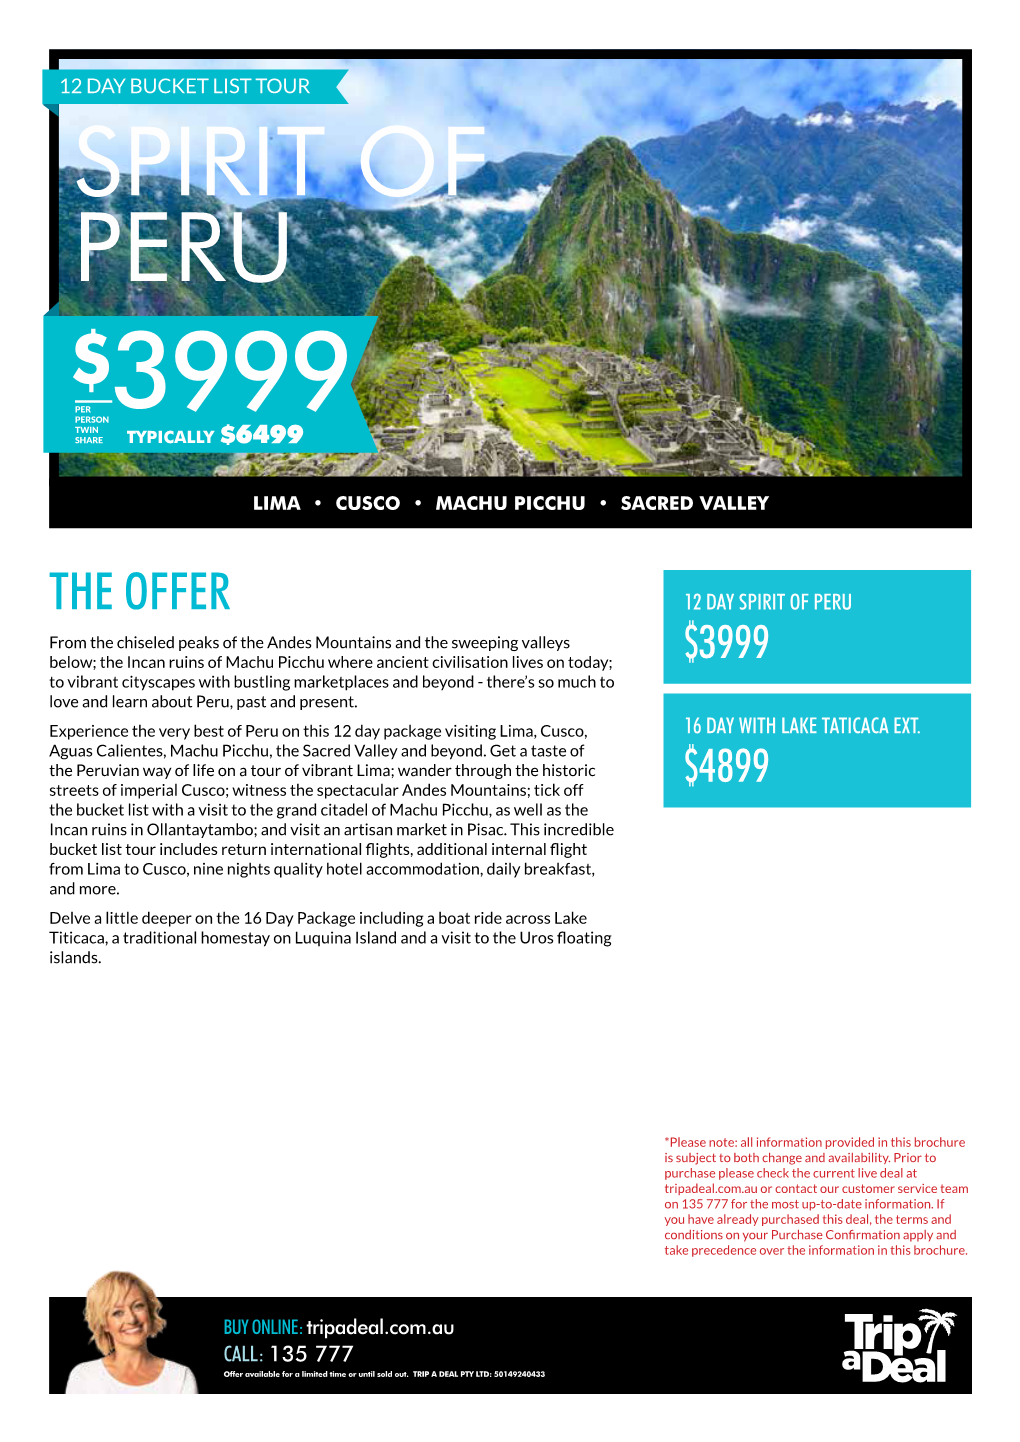 Spirit of Peru $ Per Person 3999 Twin Share Typically $6499